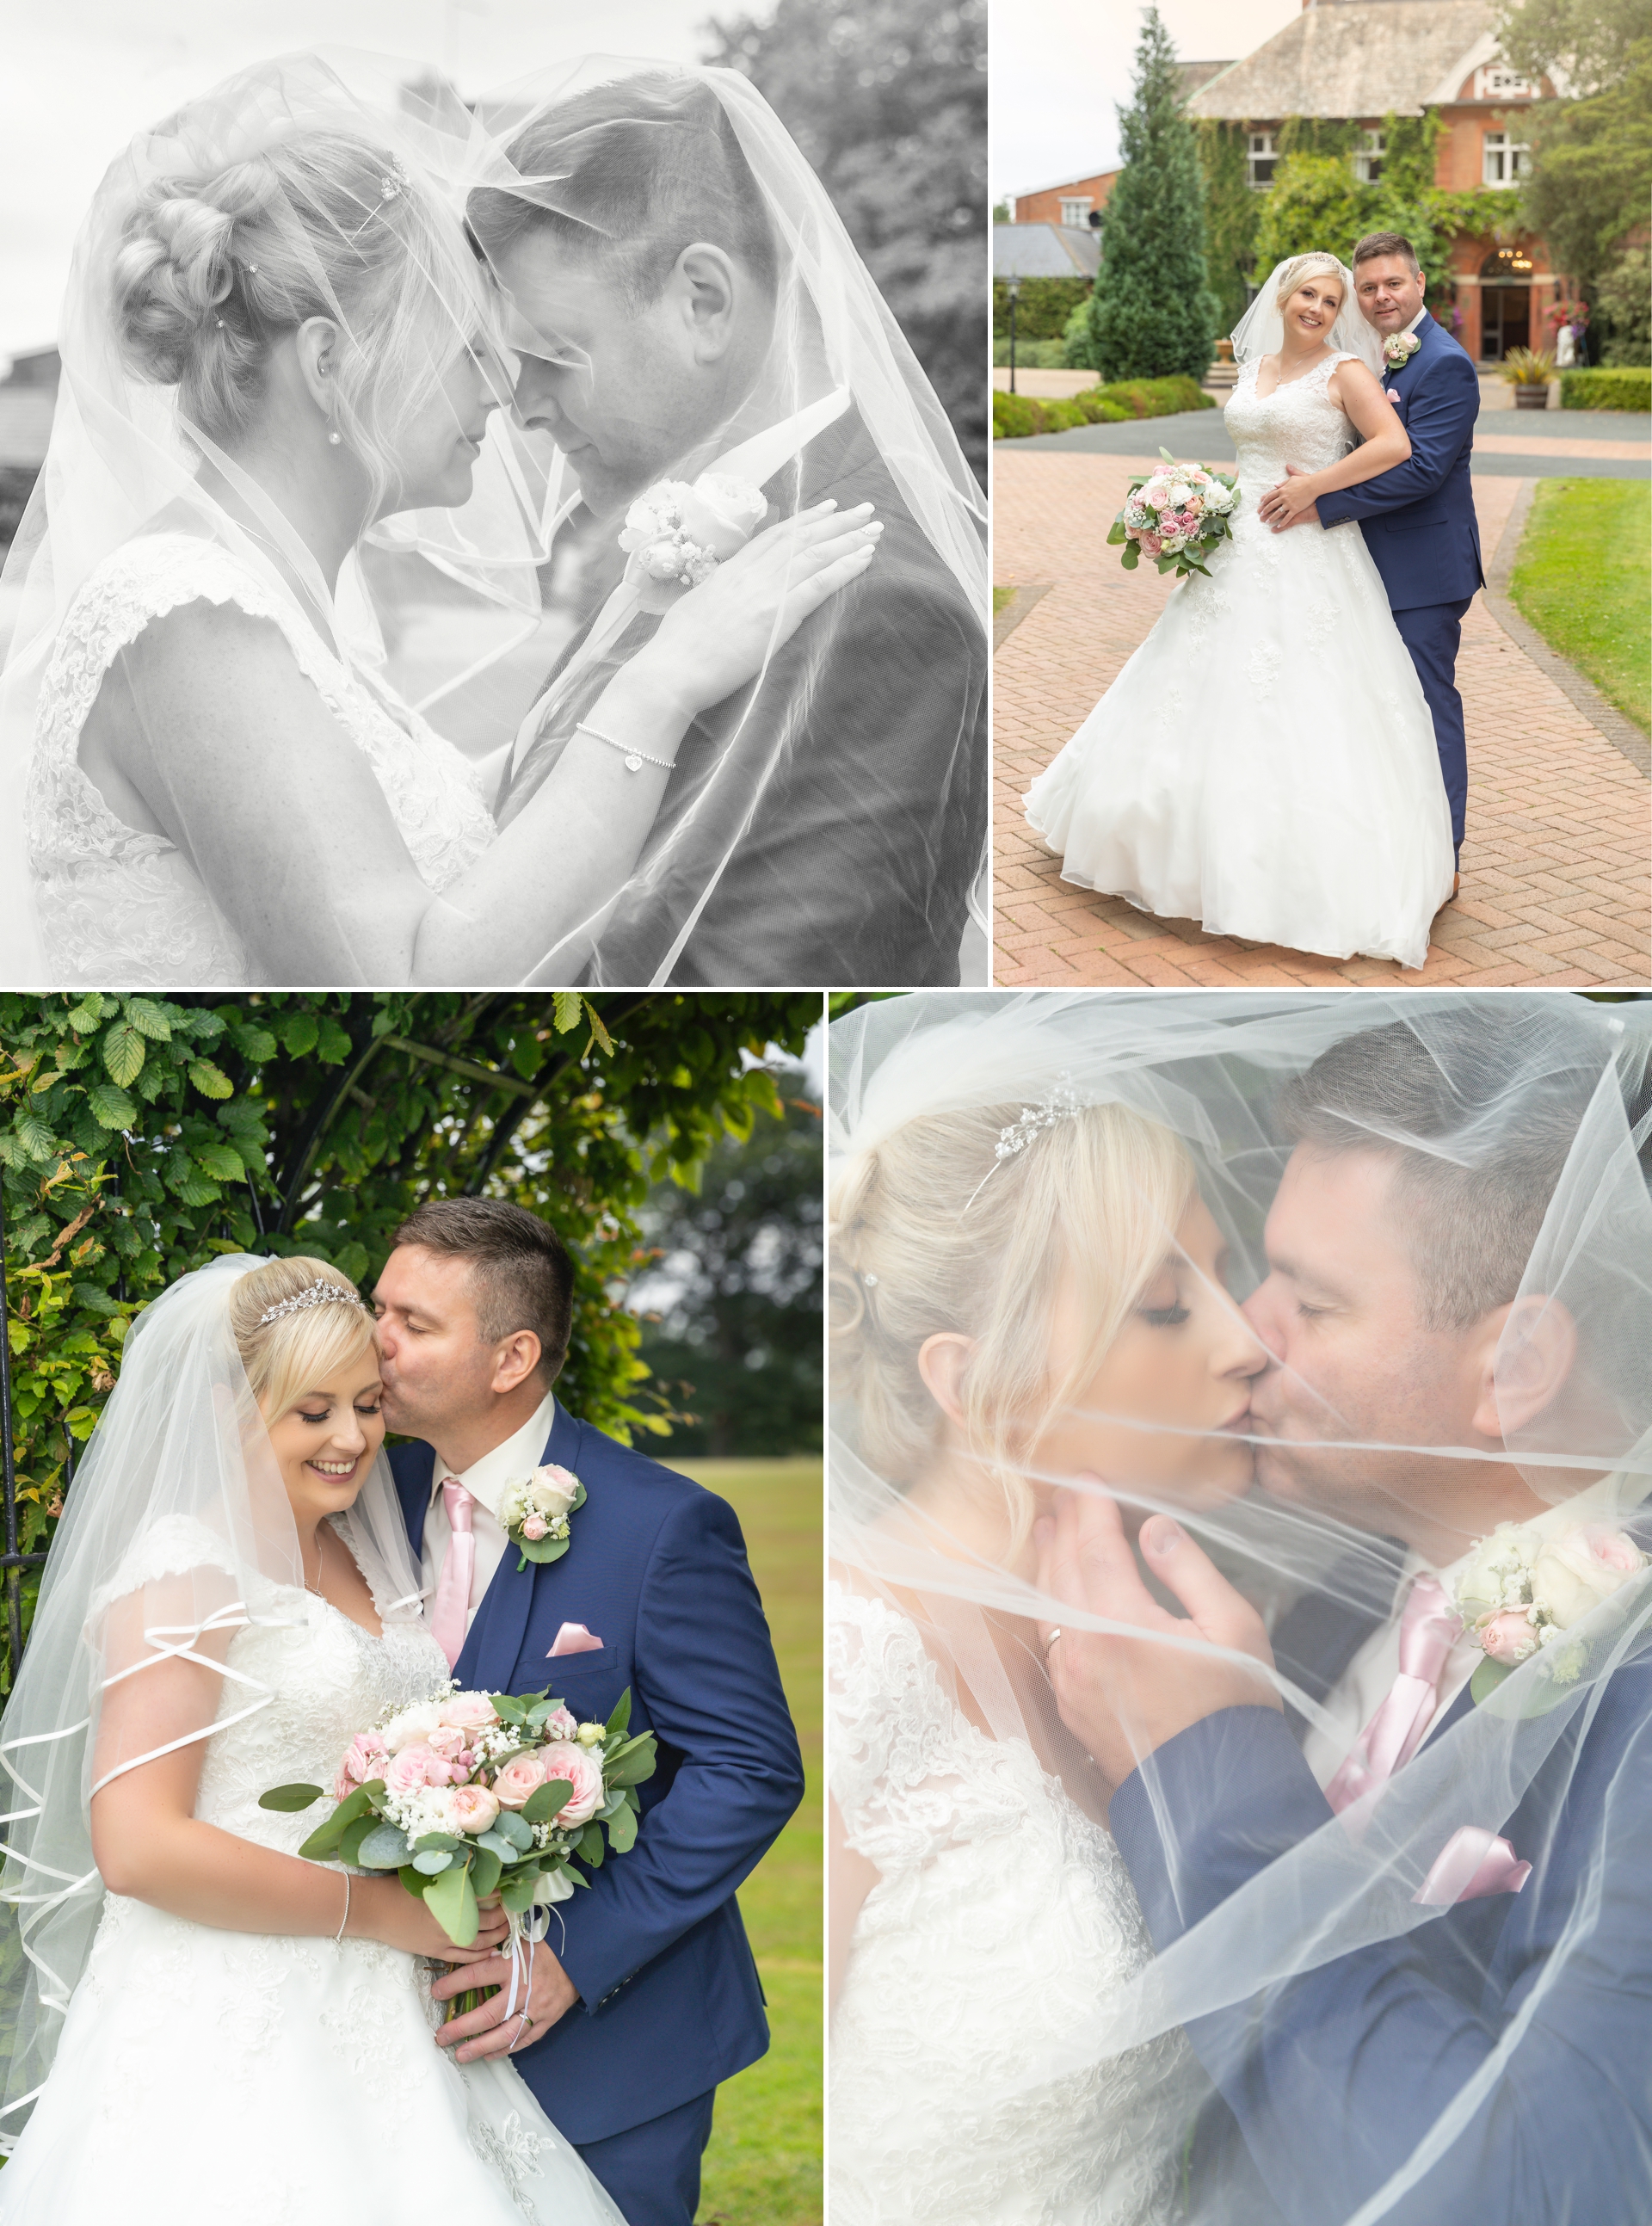 Selection of beautiful bride & groom wedding images 